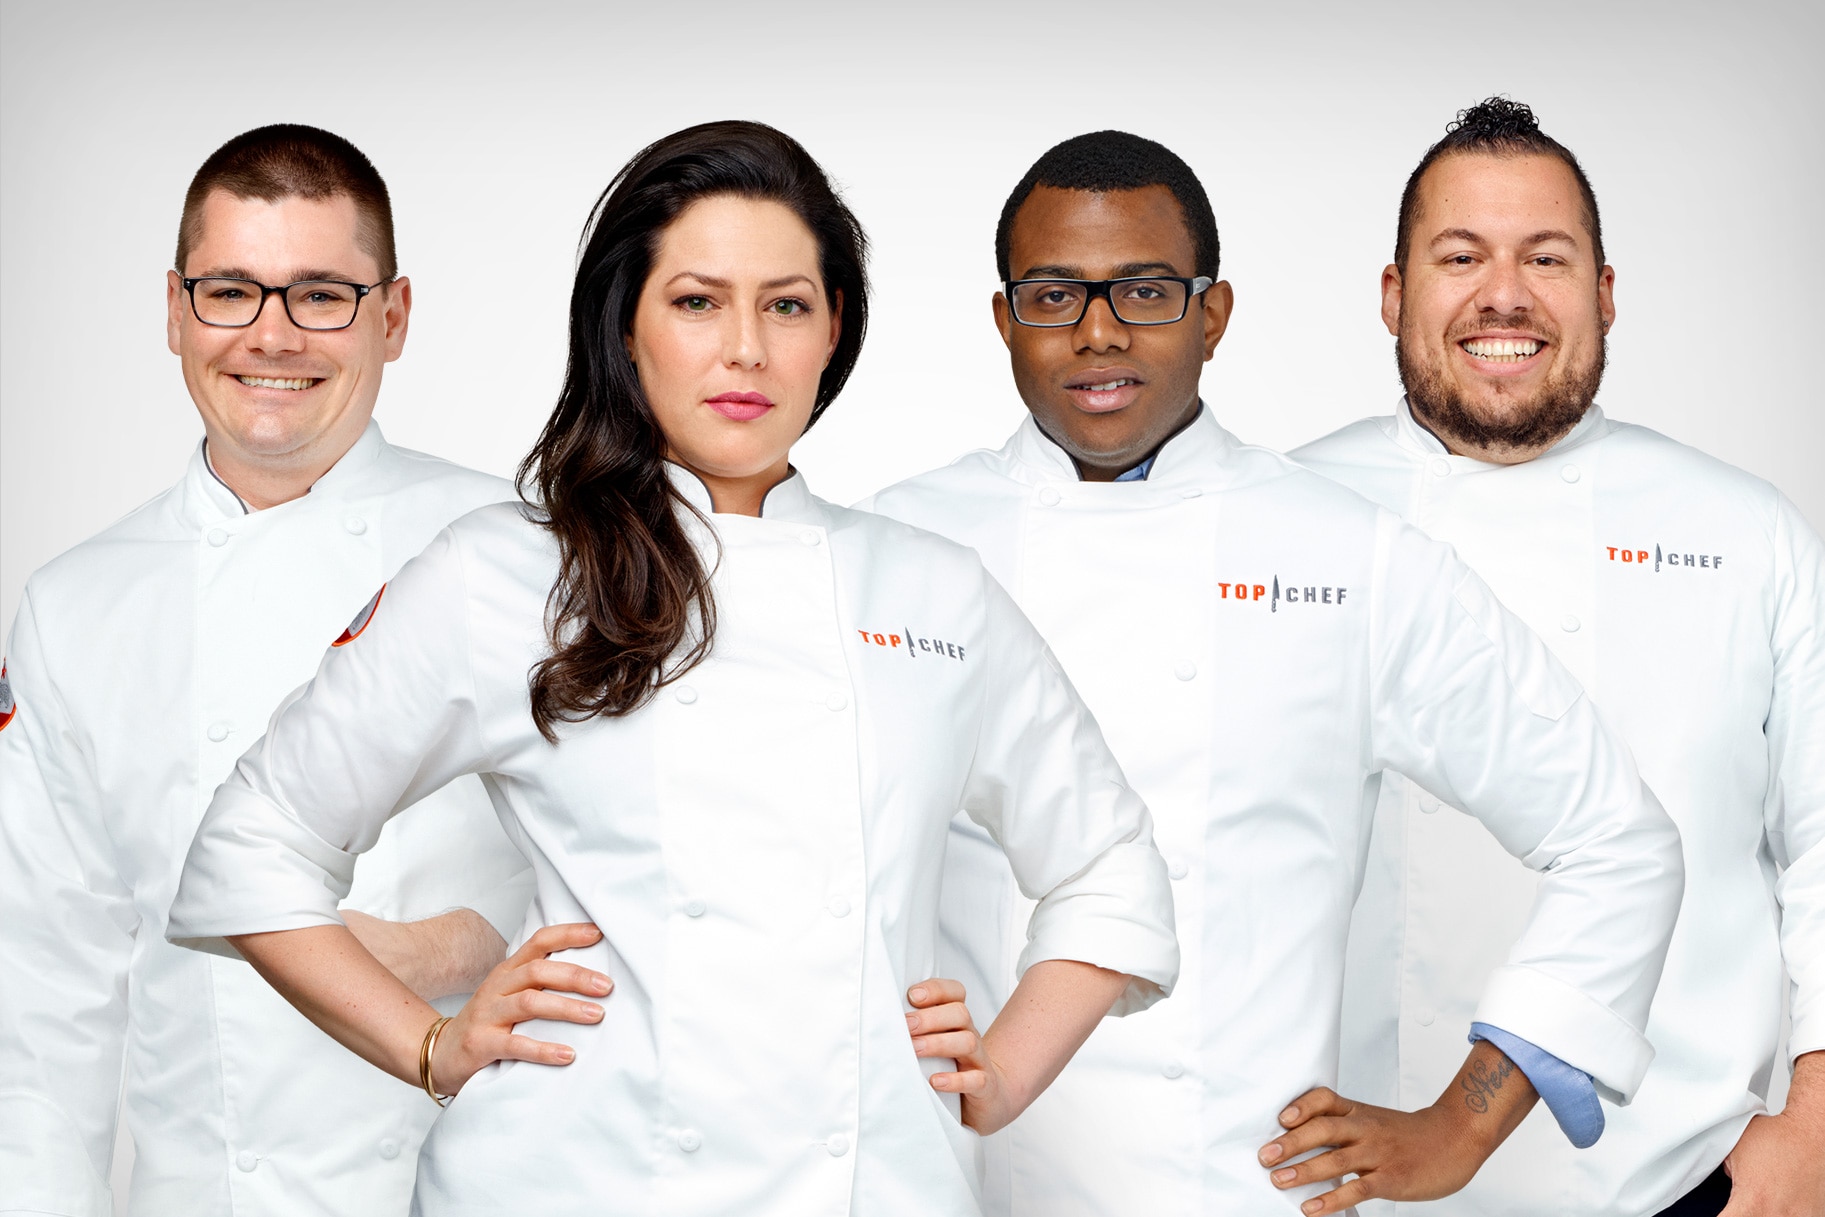 Top Chef Season 13 Chefs Kwame Onwuachi, Amar Santana, Grayson Schmitz